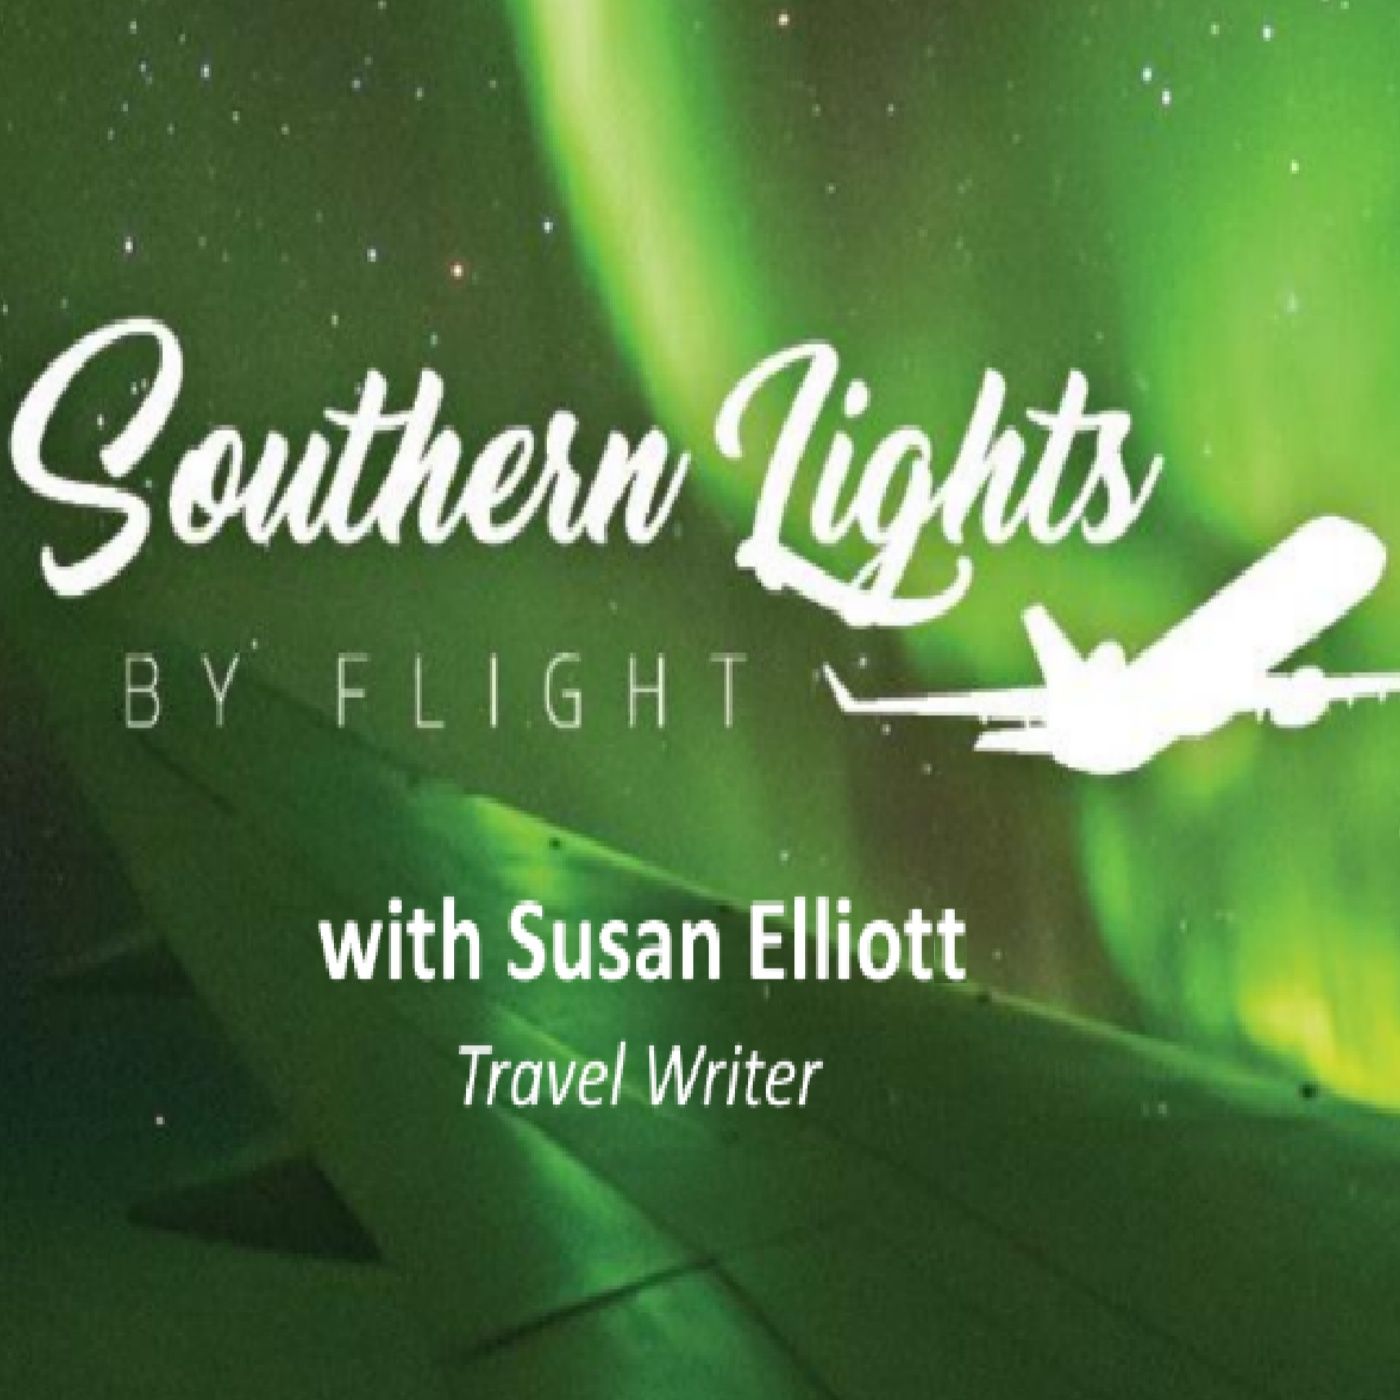 Southern Lights By Flight! - Susan Elliott